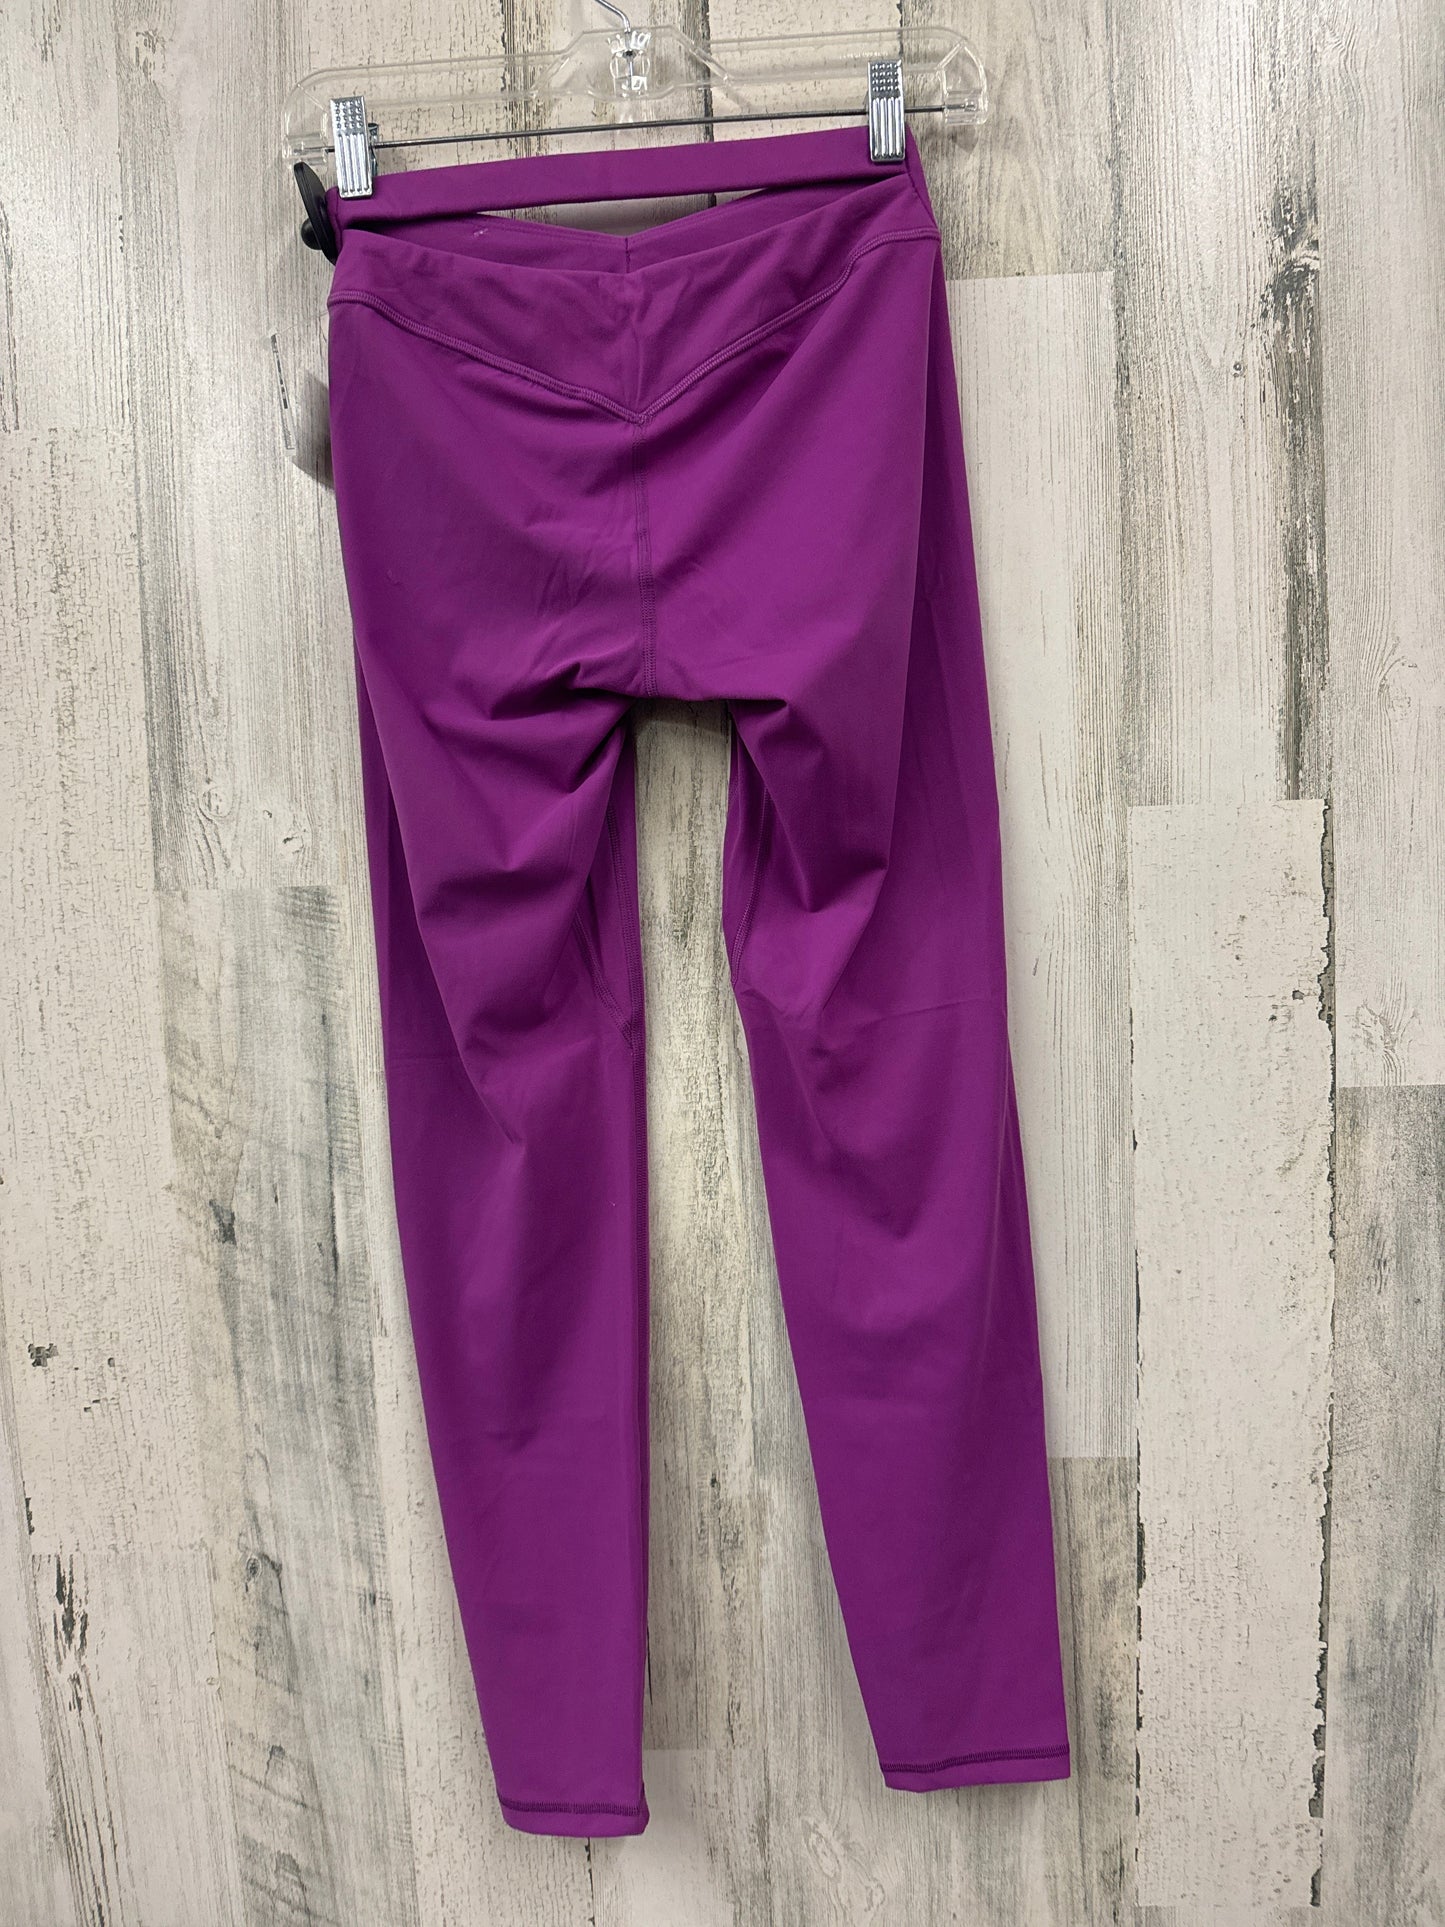 Purple Athletic Leggings Clothes Mentor, Size M